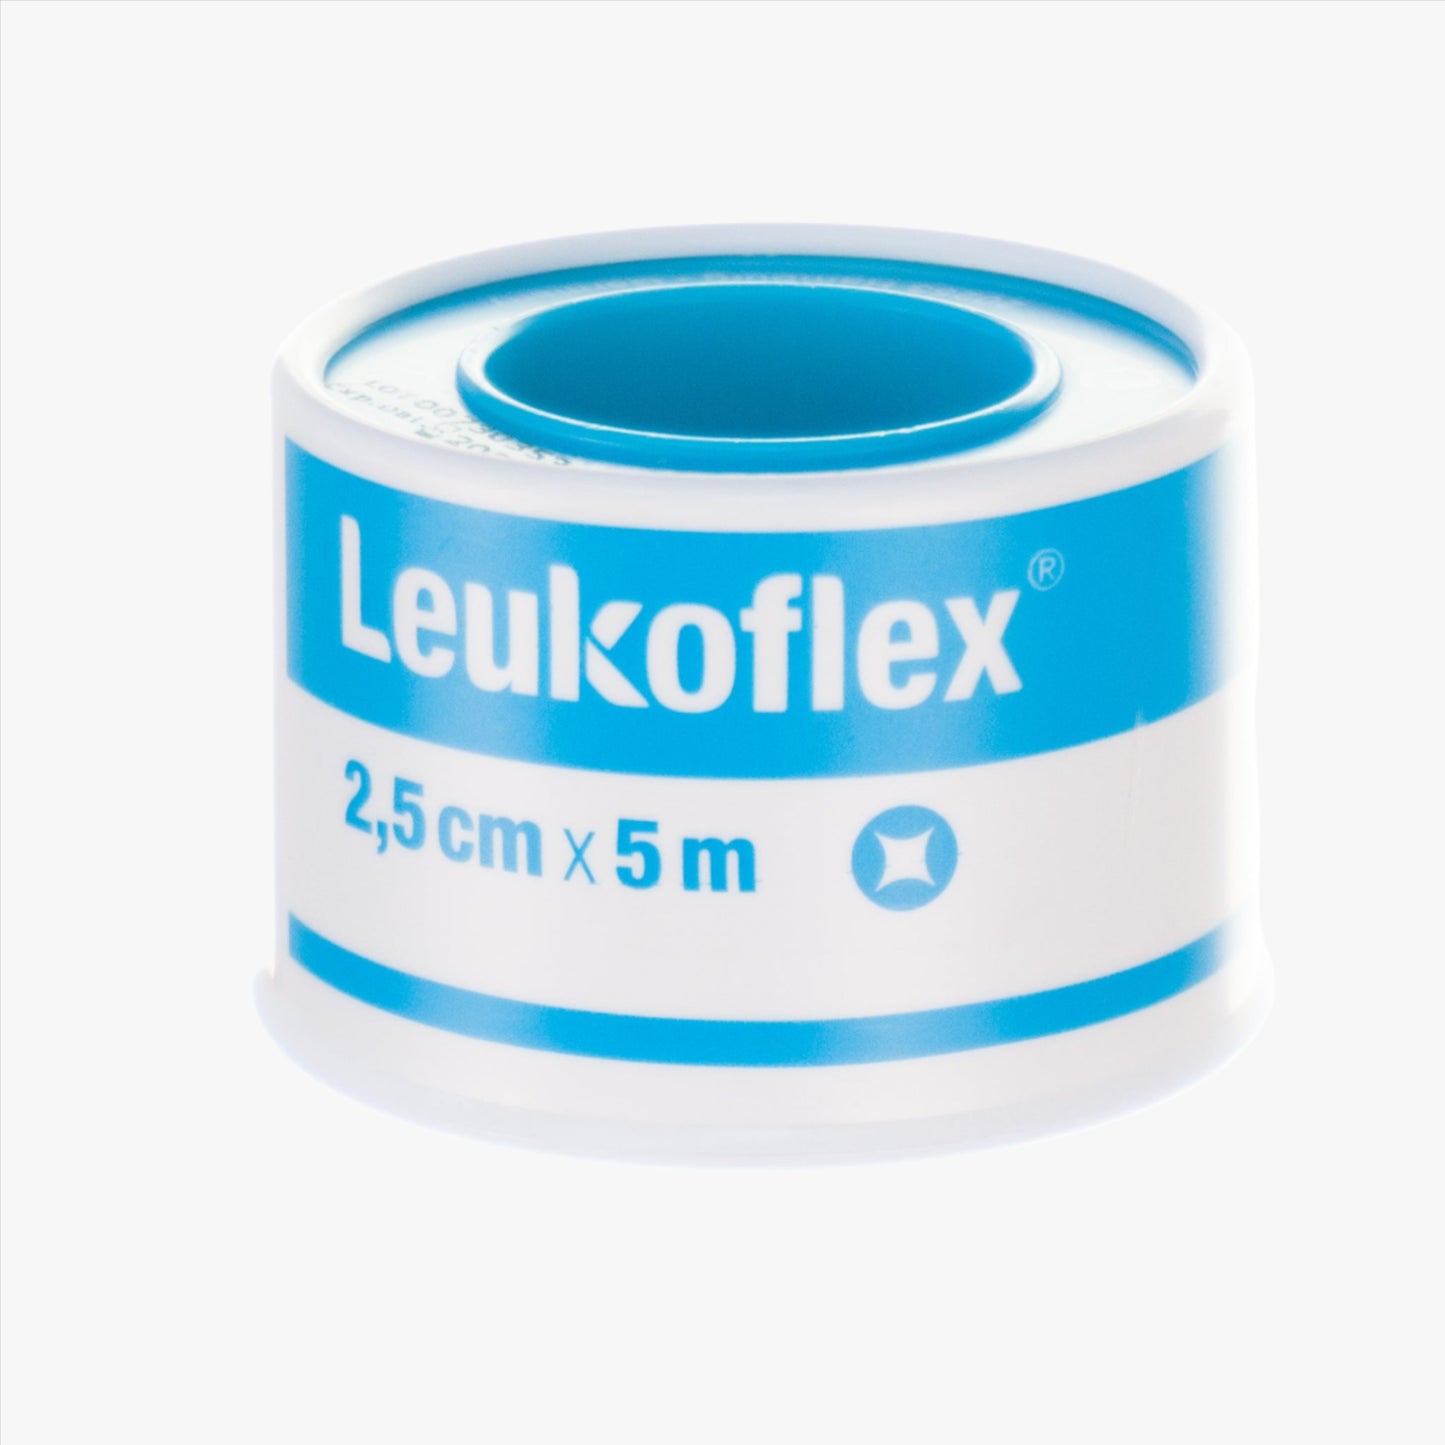 Leukoflex 2.5 cm x 5 m